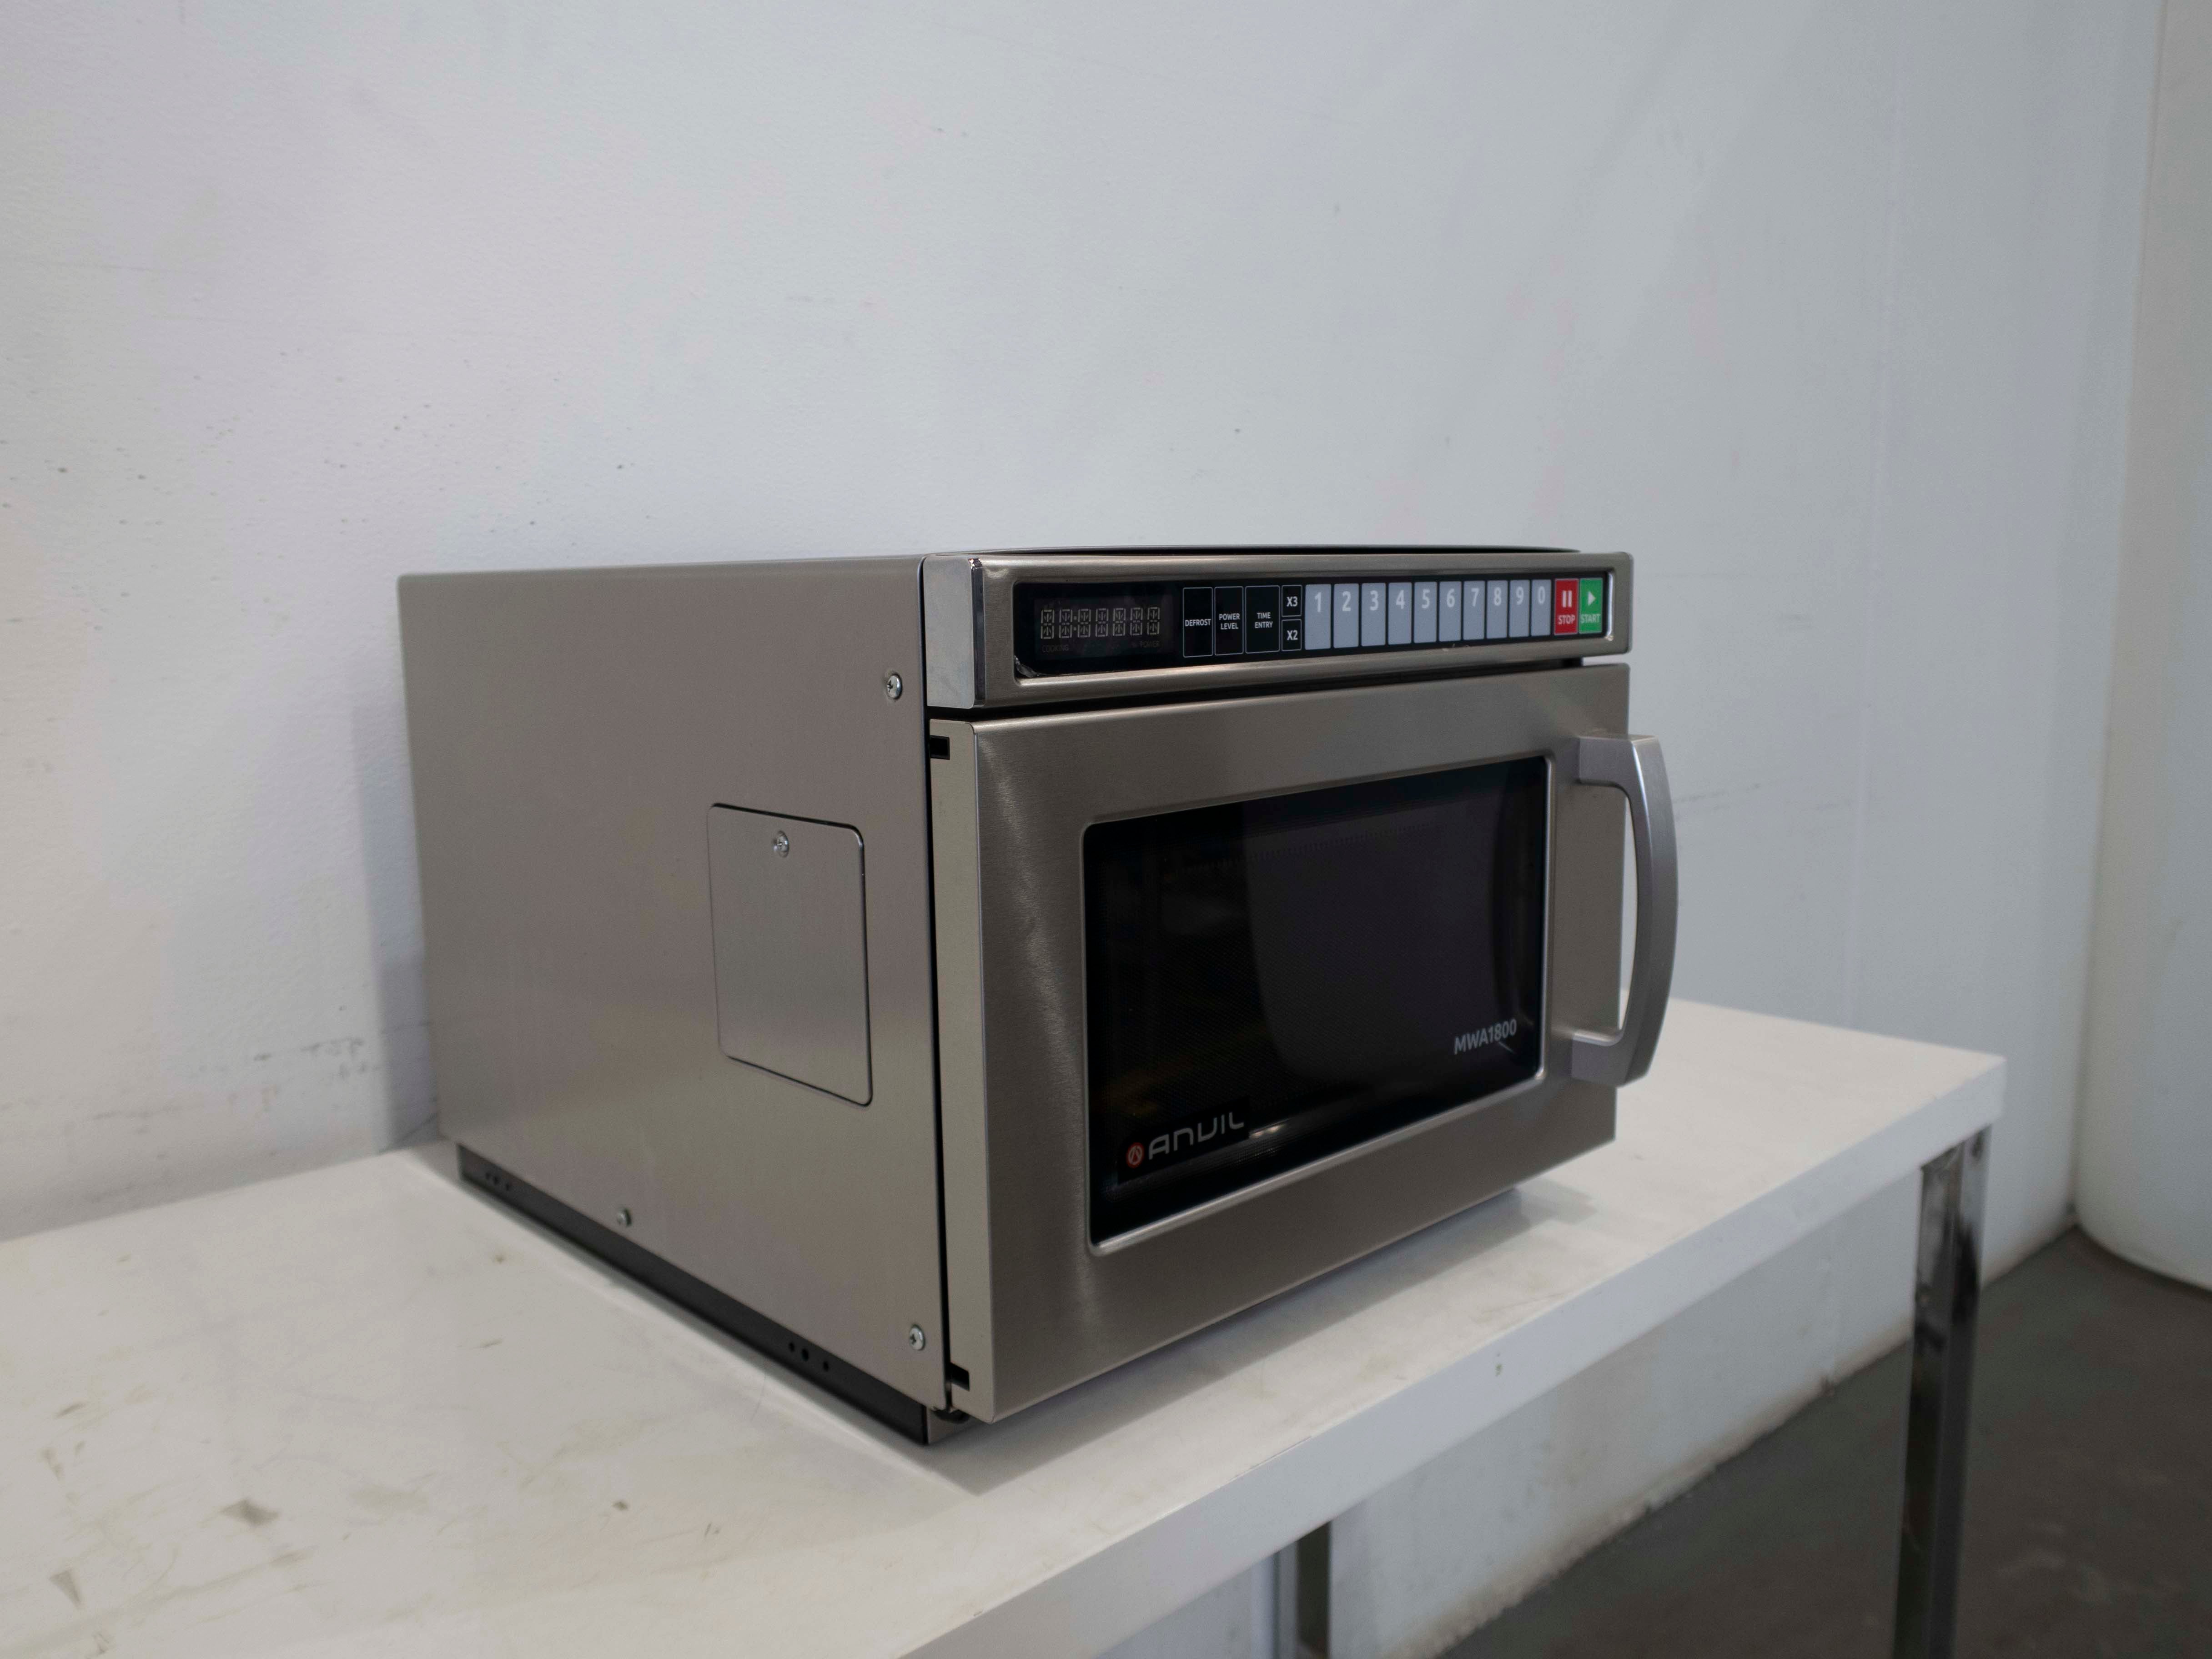 Thumbnail - Anvil MWA1800 Microwave Oven